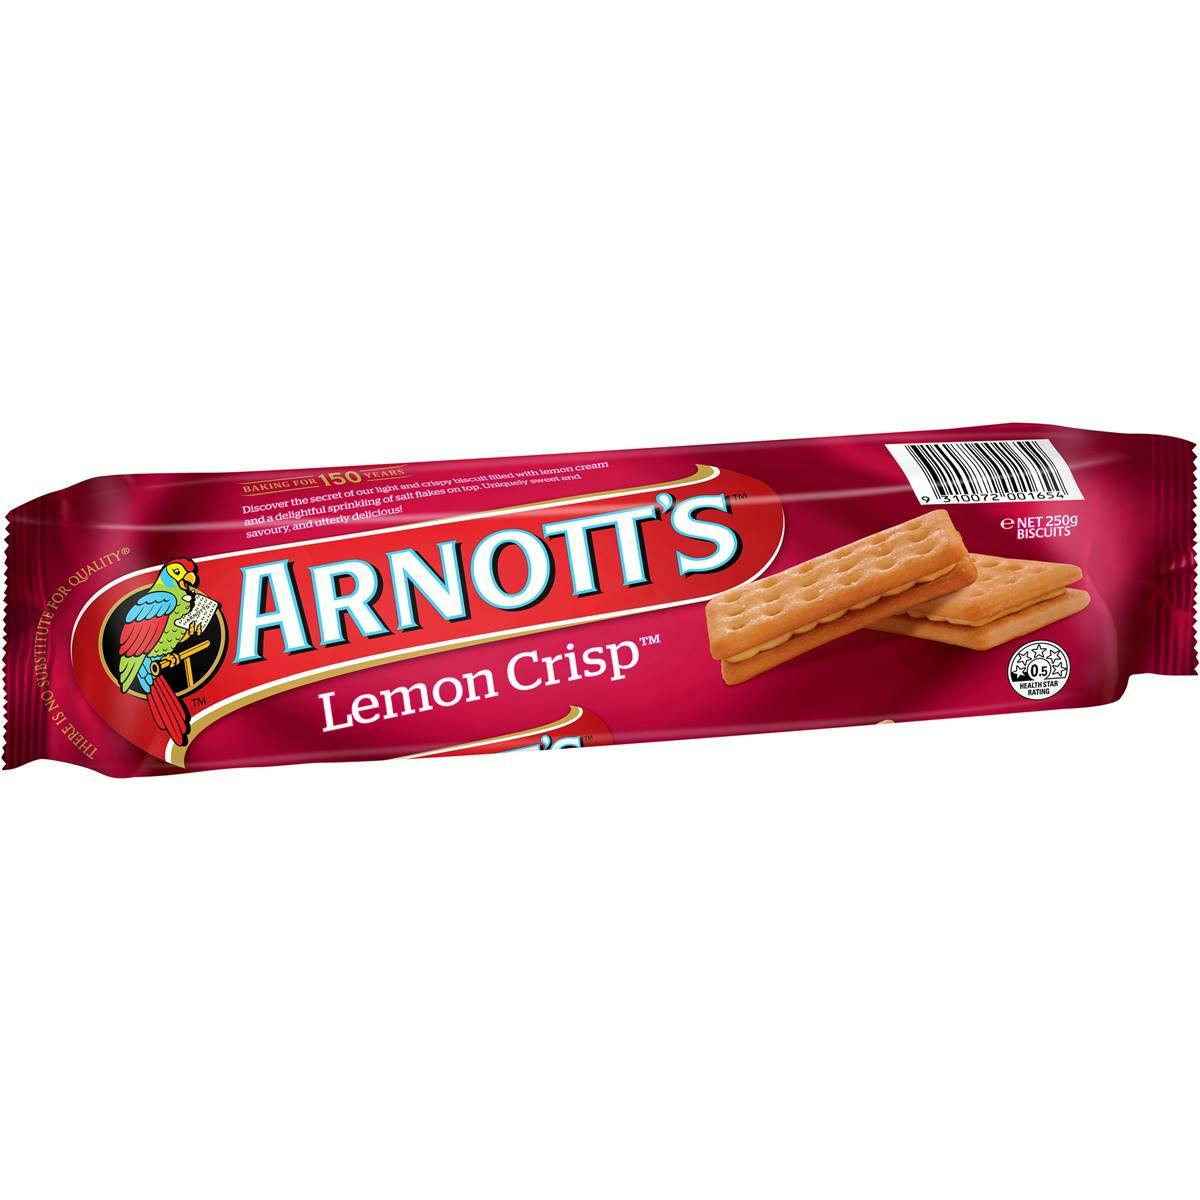 Arnott's Lemon Crisp Cream Biscuits